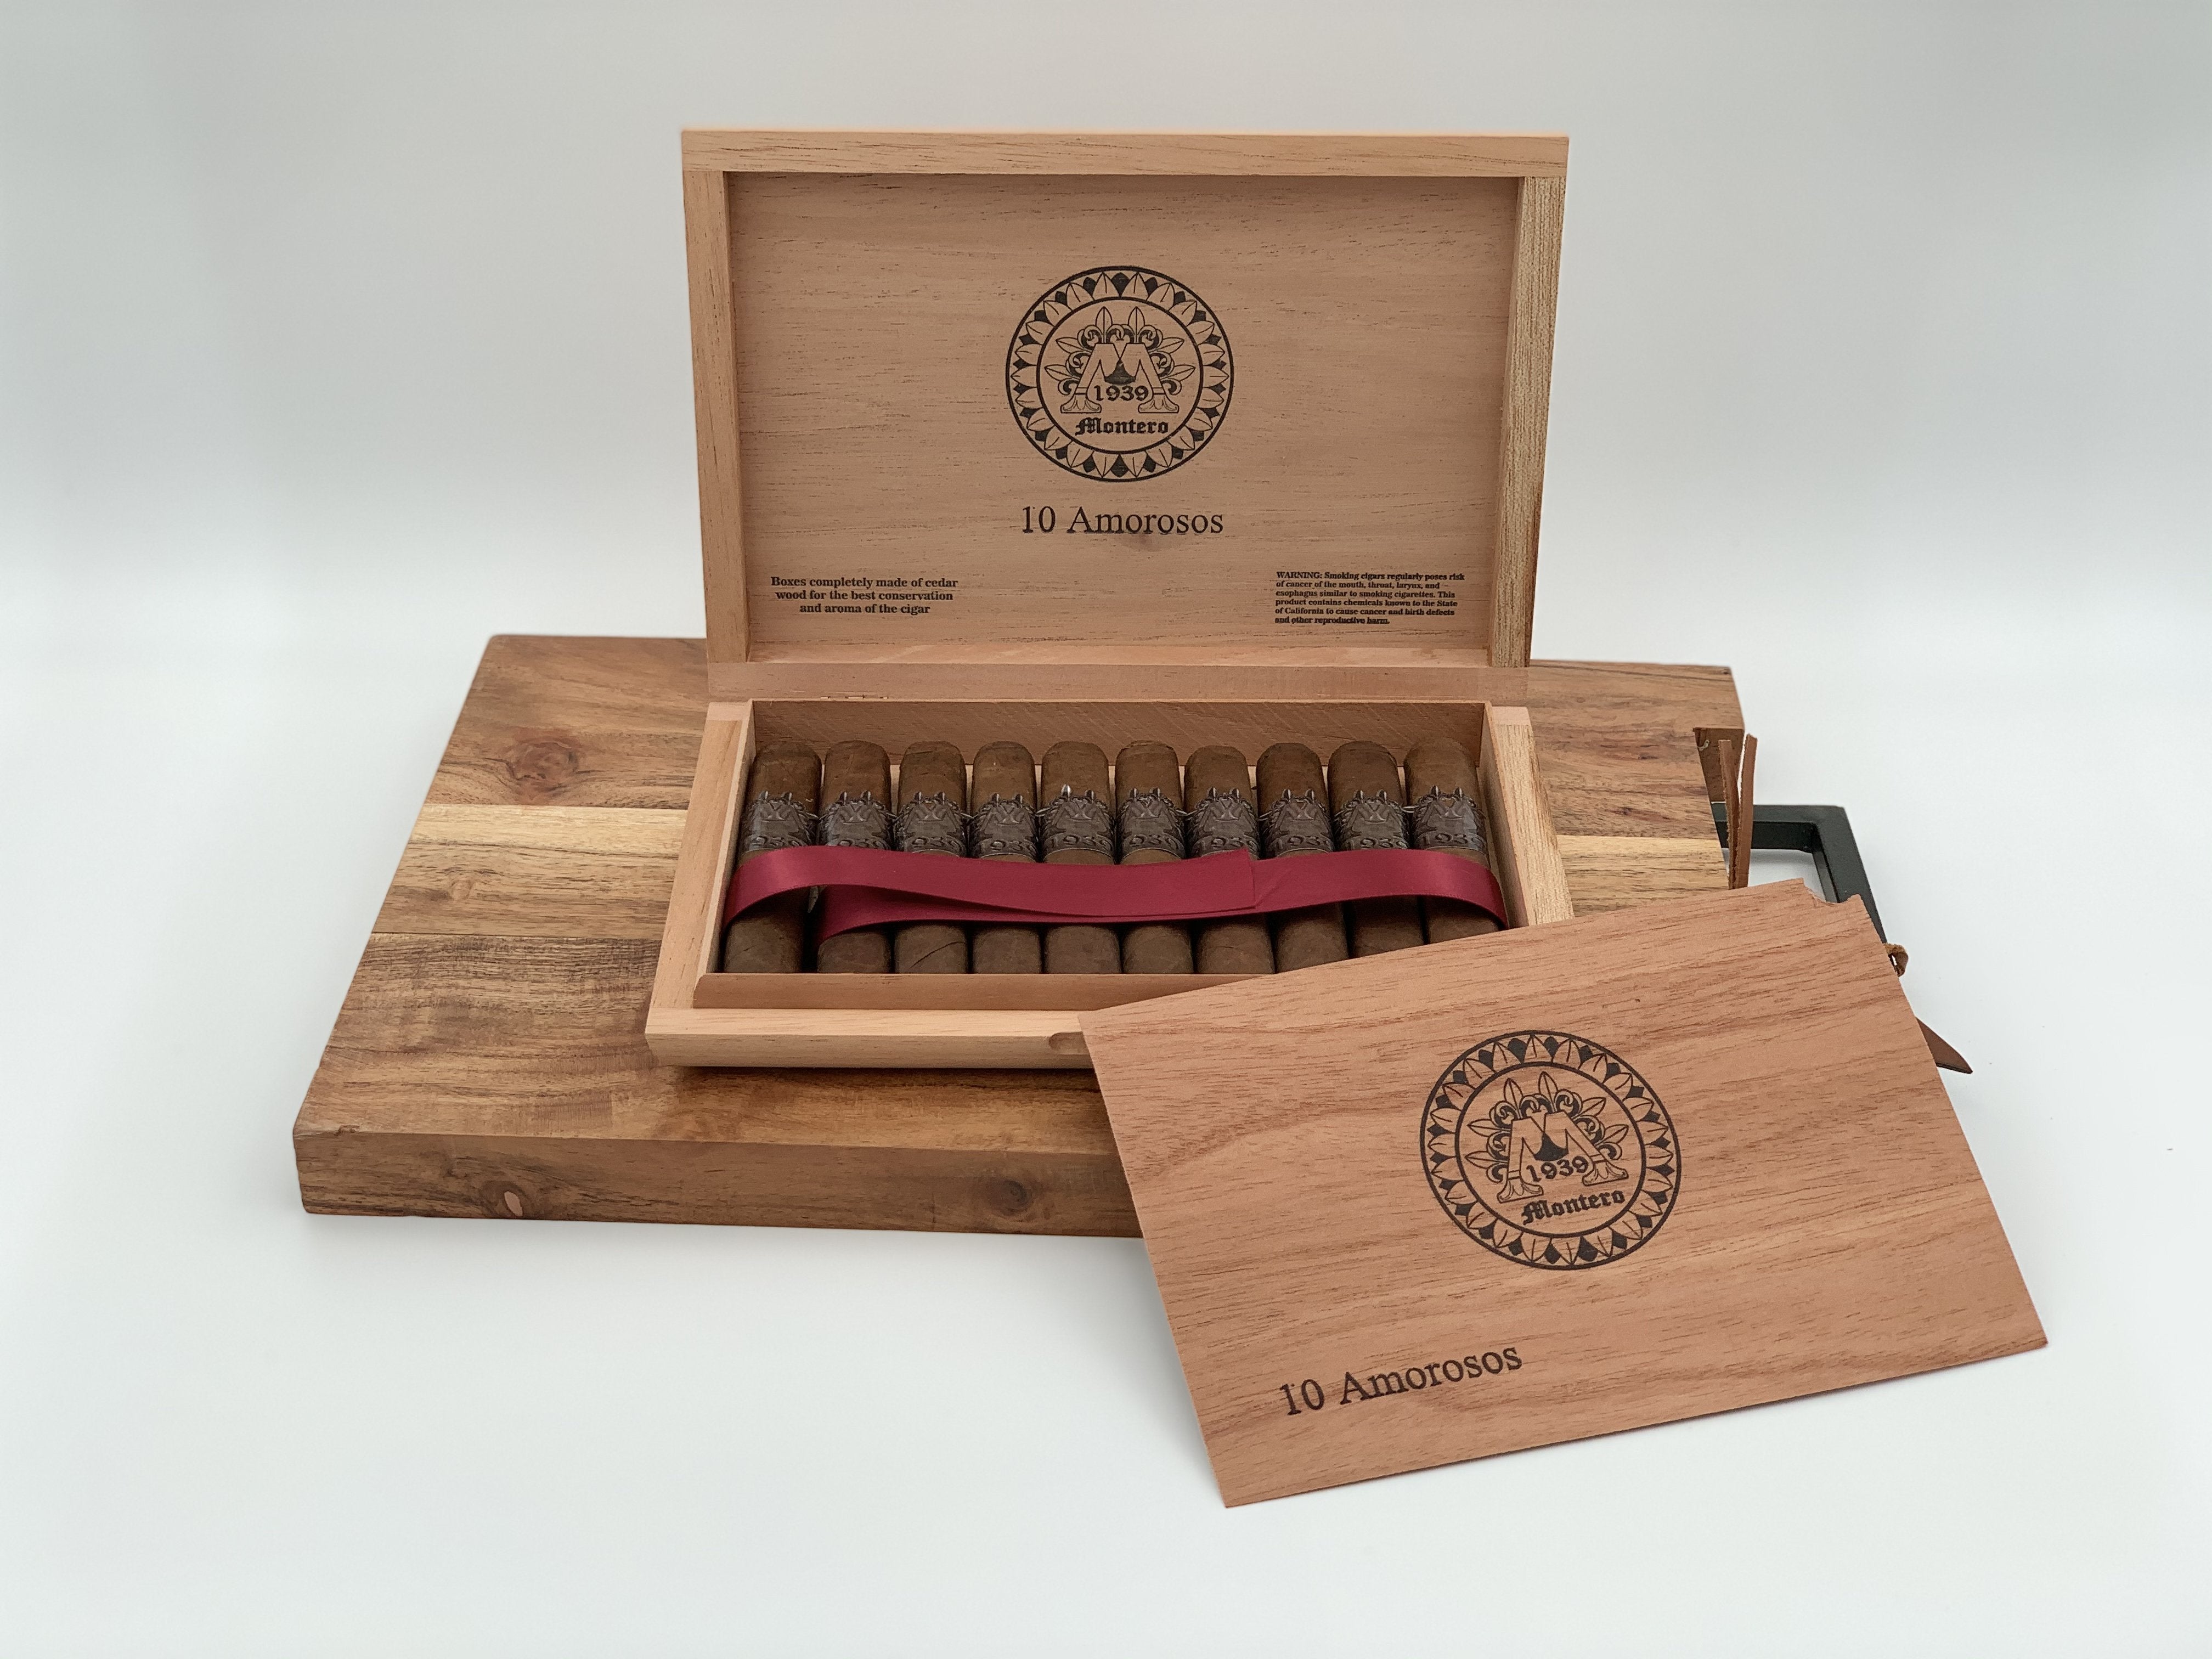 Montero 1939 - Amorosos (10) Cigars & Cedar Wood Case